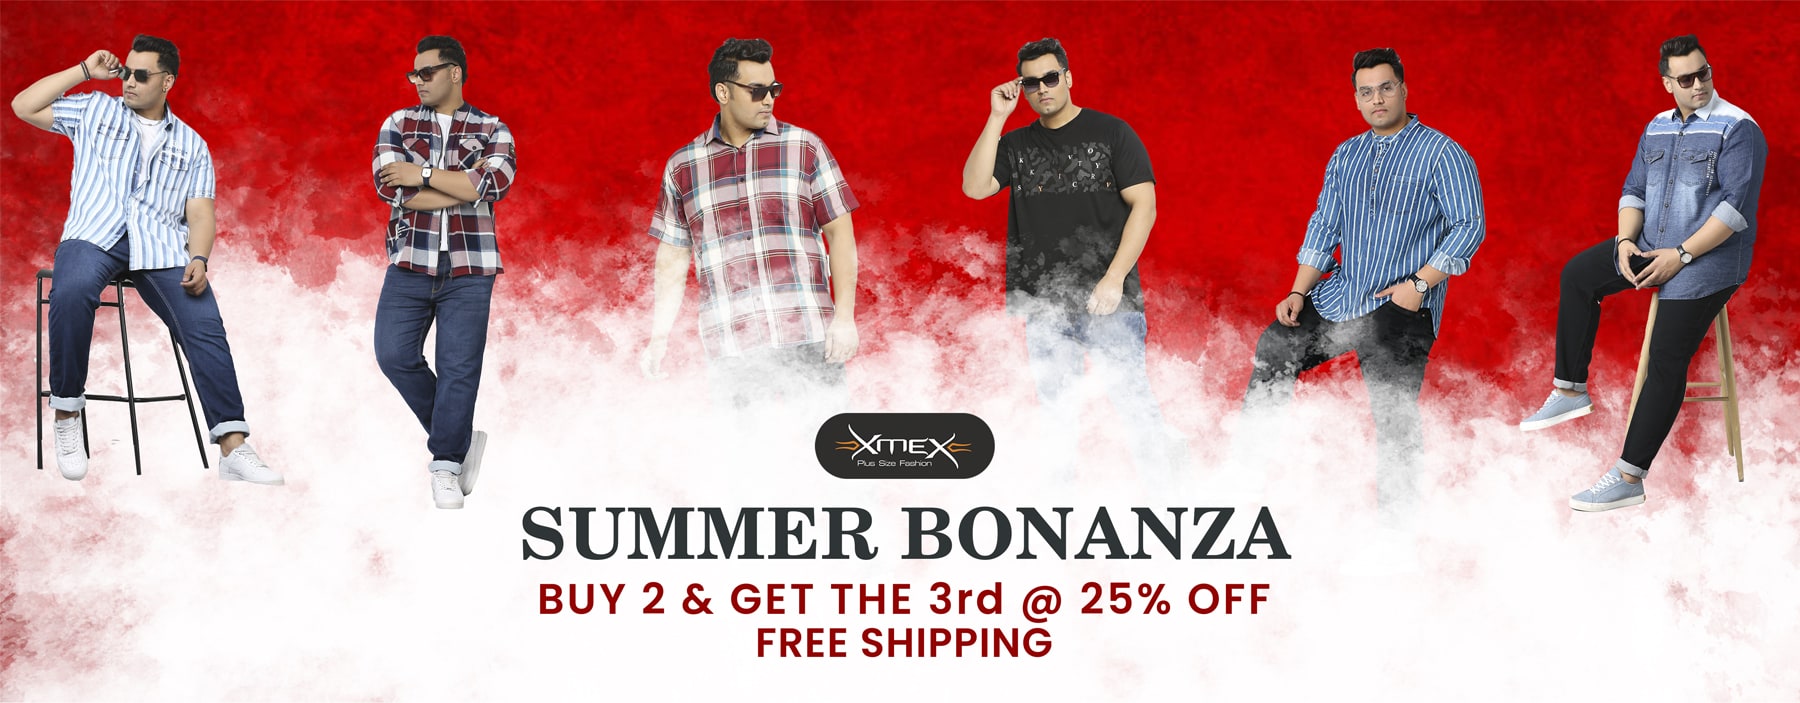 Summer Bonanza - Buy 2 & Get the 3rd @ 25% OFF